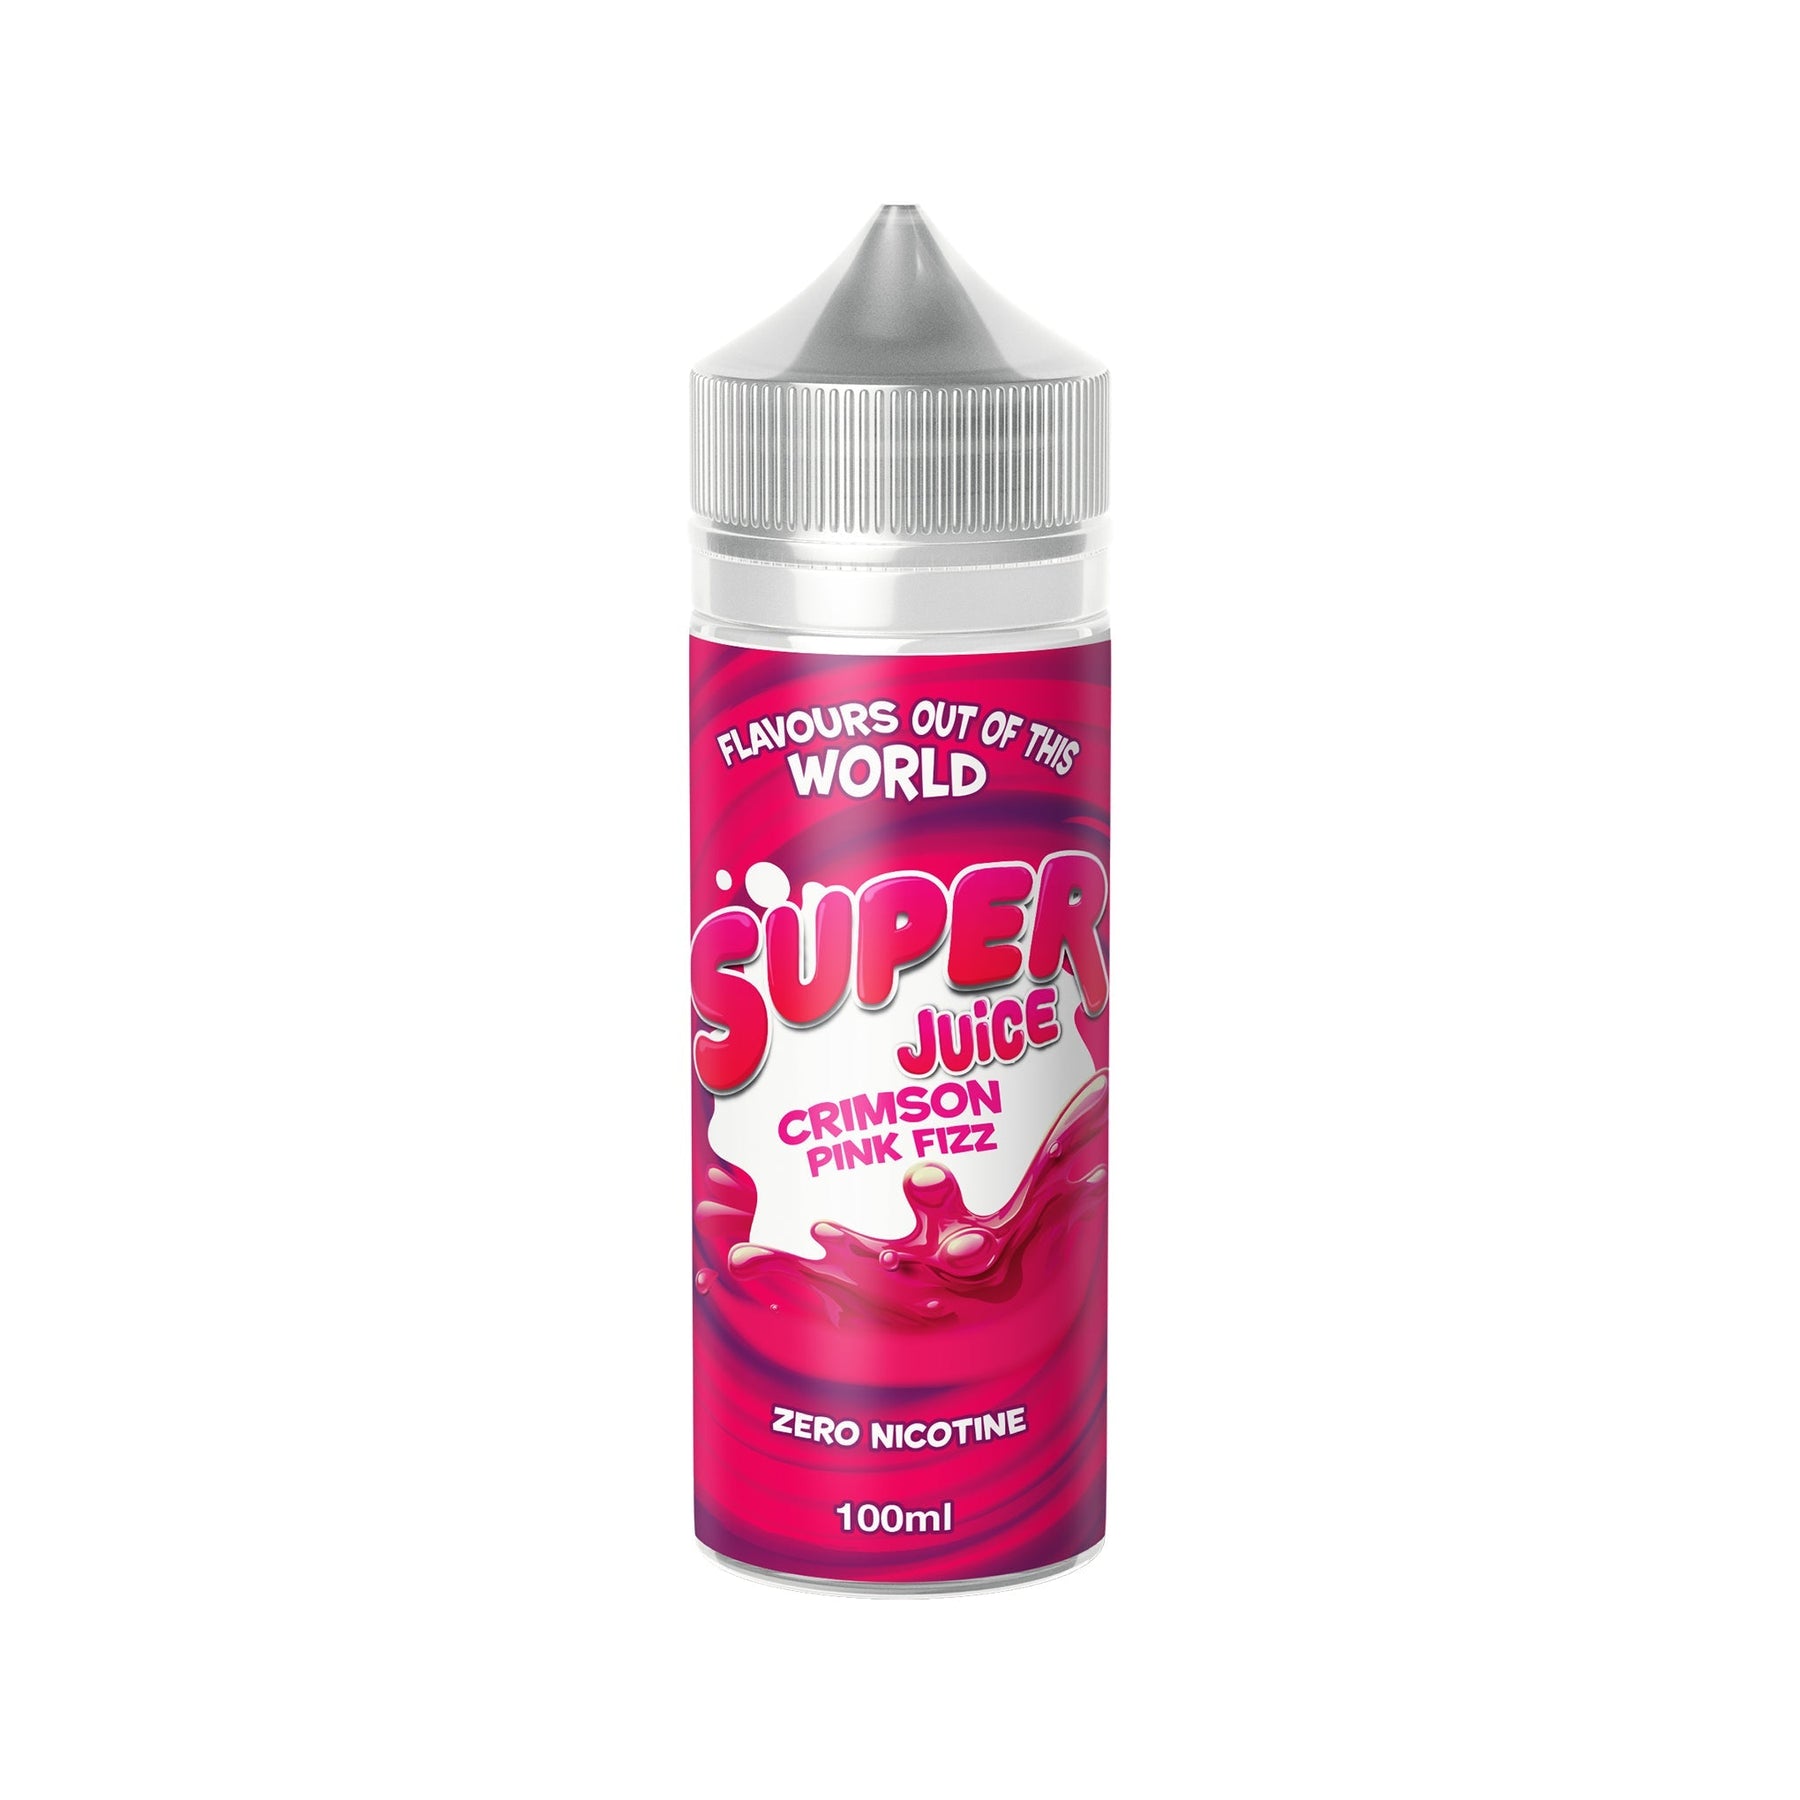 Super Juice Short Fill E-Liquid by IVG Crimson Pink Fizz 